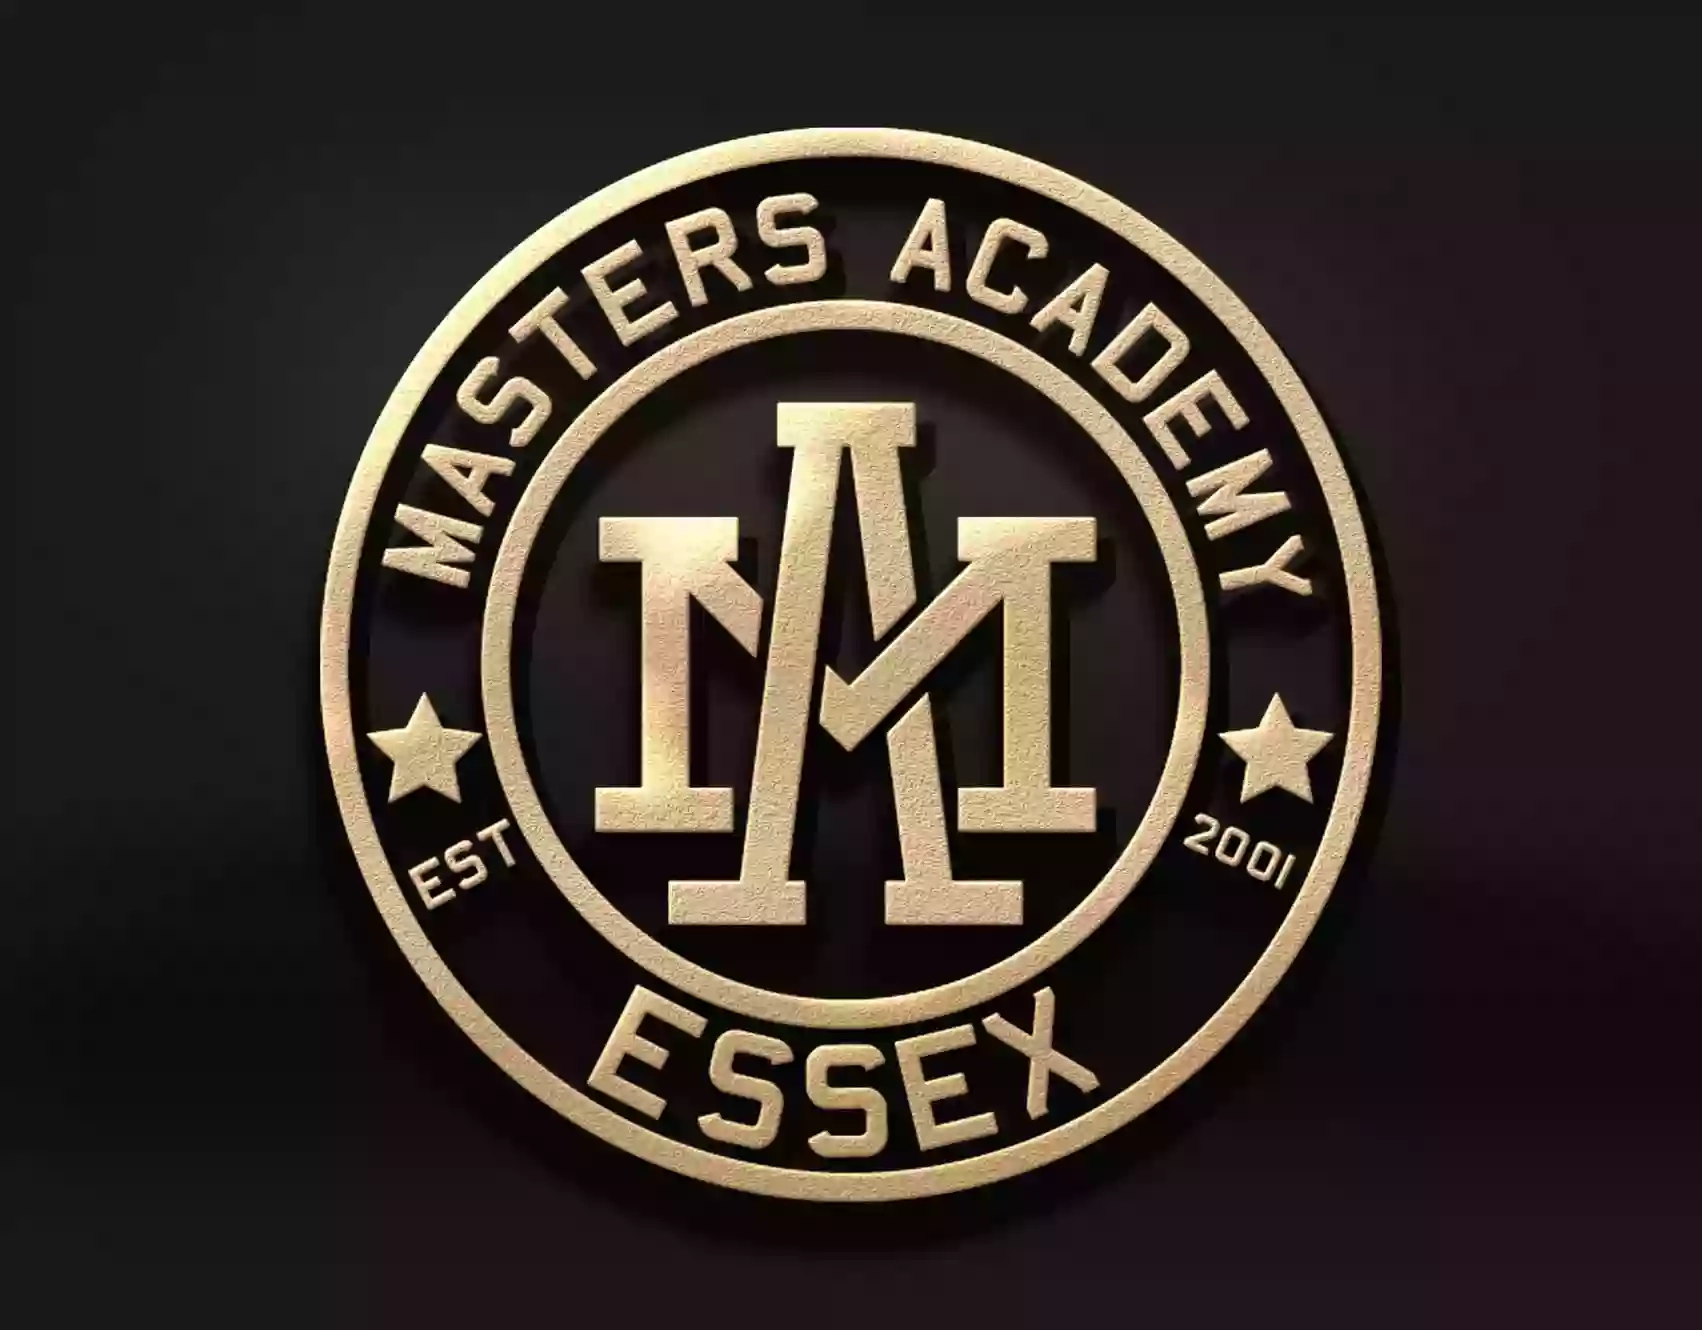 Masters Academy of Martial Arts